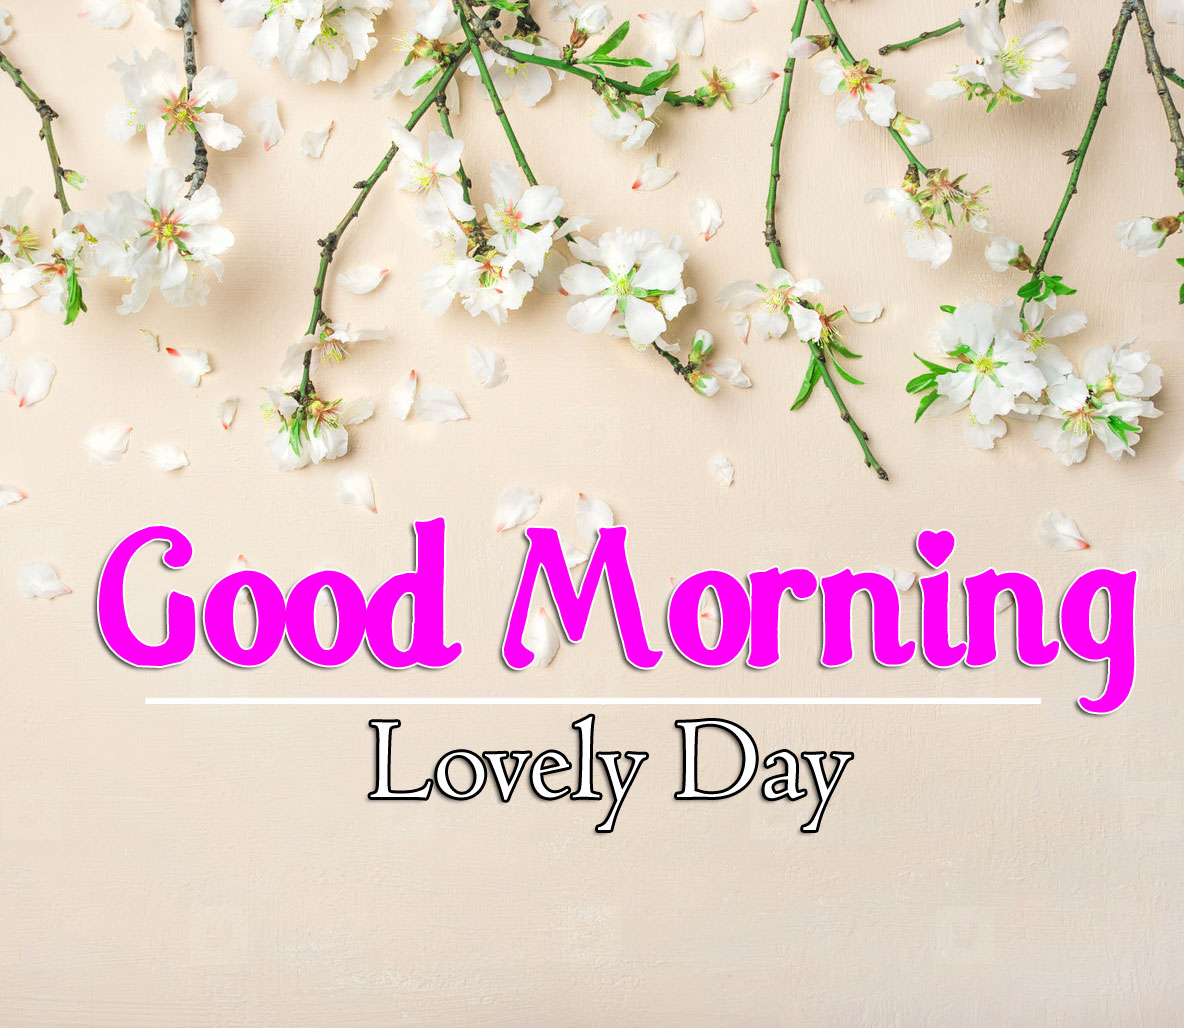 Best Quality Flower 4k Good Morning Pics Images Download